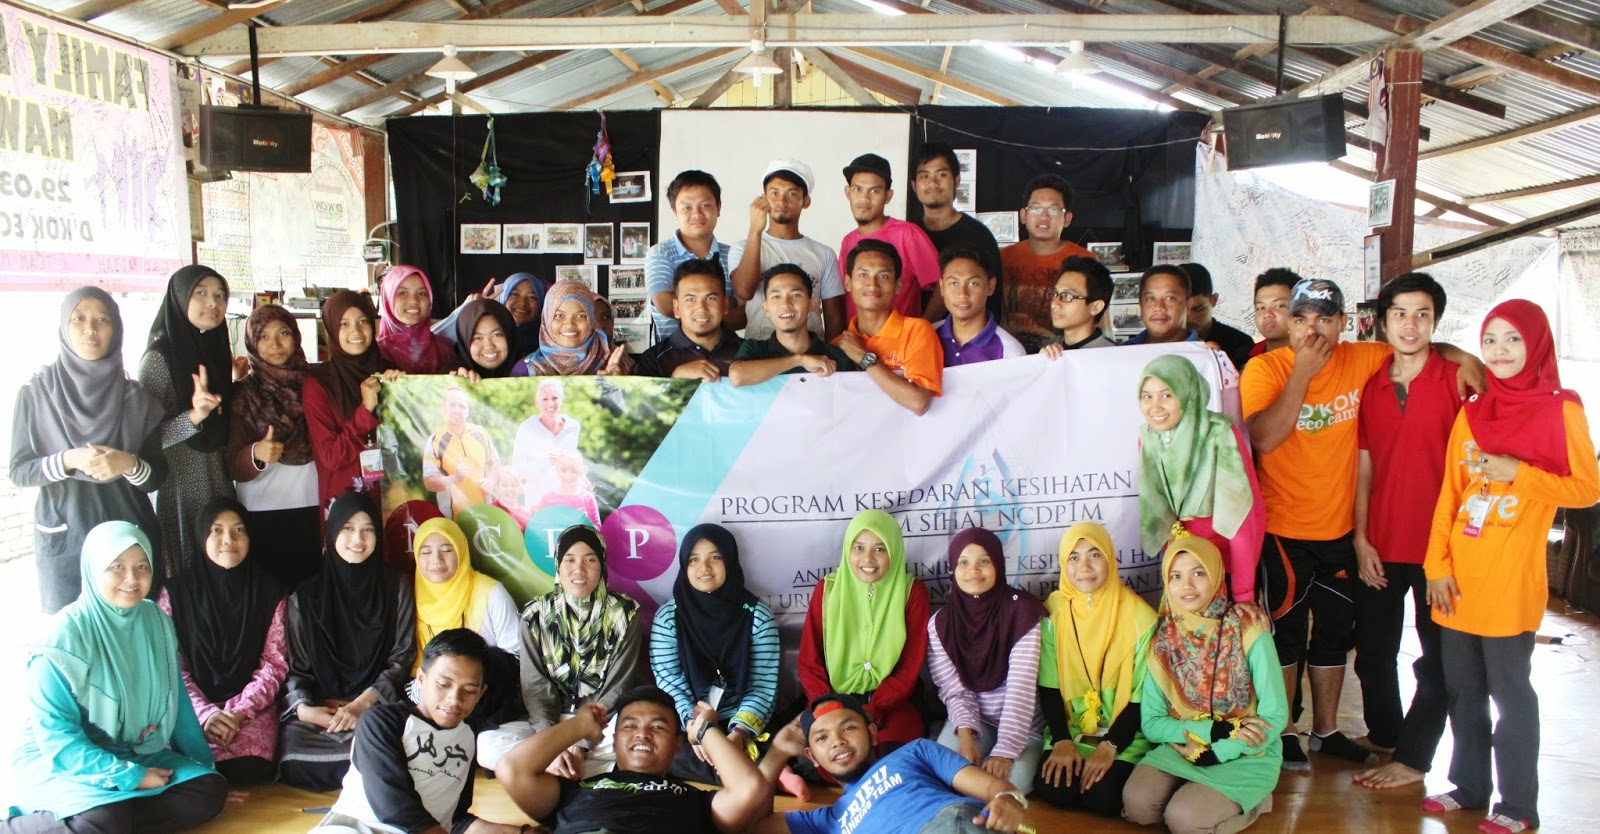 Celoteh Adkdayah: Dkok Eko Camp, Kg Talang Kuala Pilah